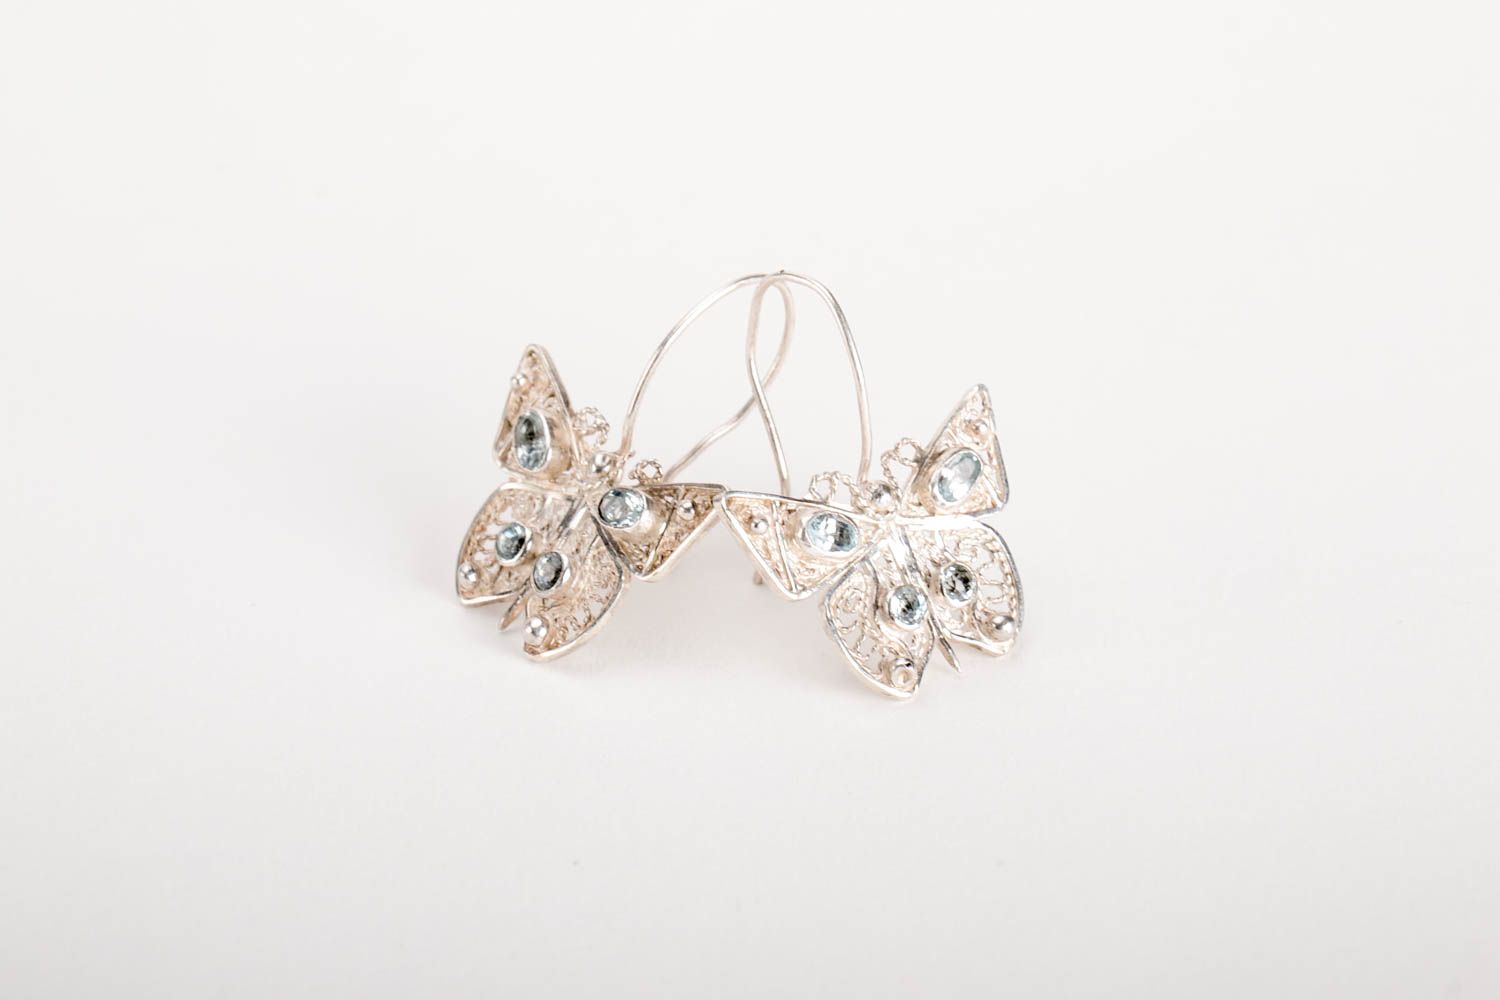 Silver earrings designer accessories handmade jewelry fashion earrings photo 2